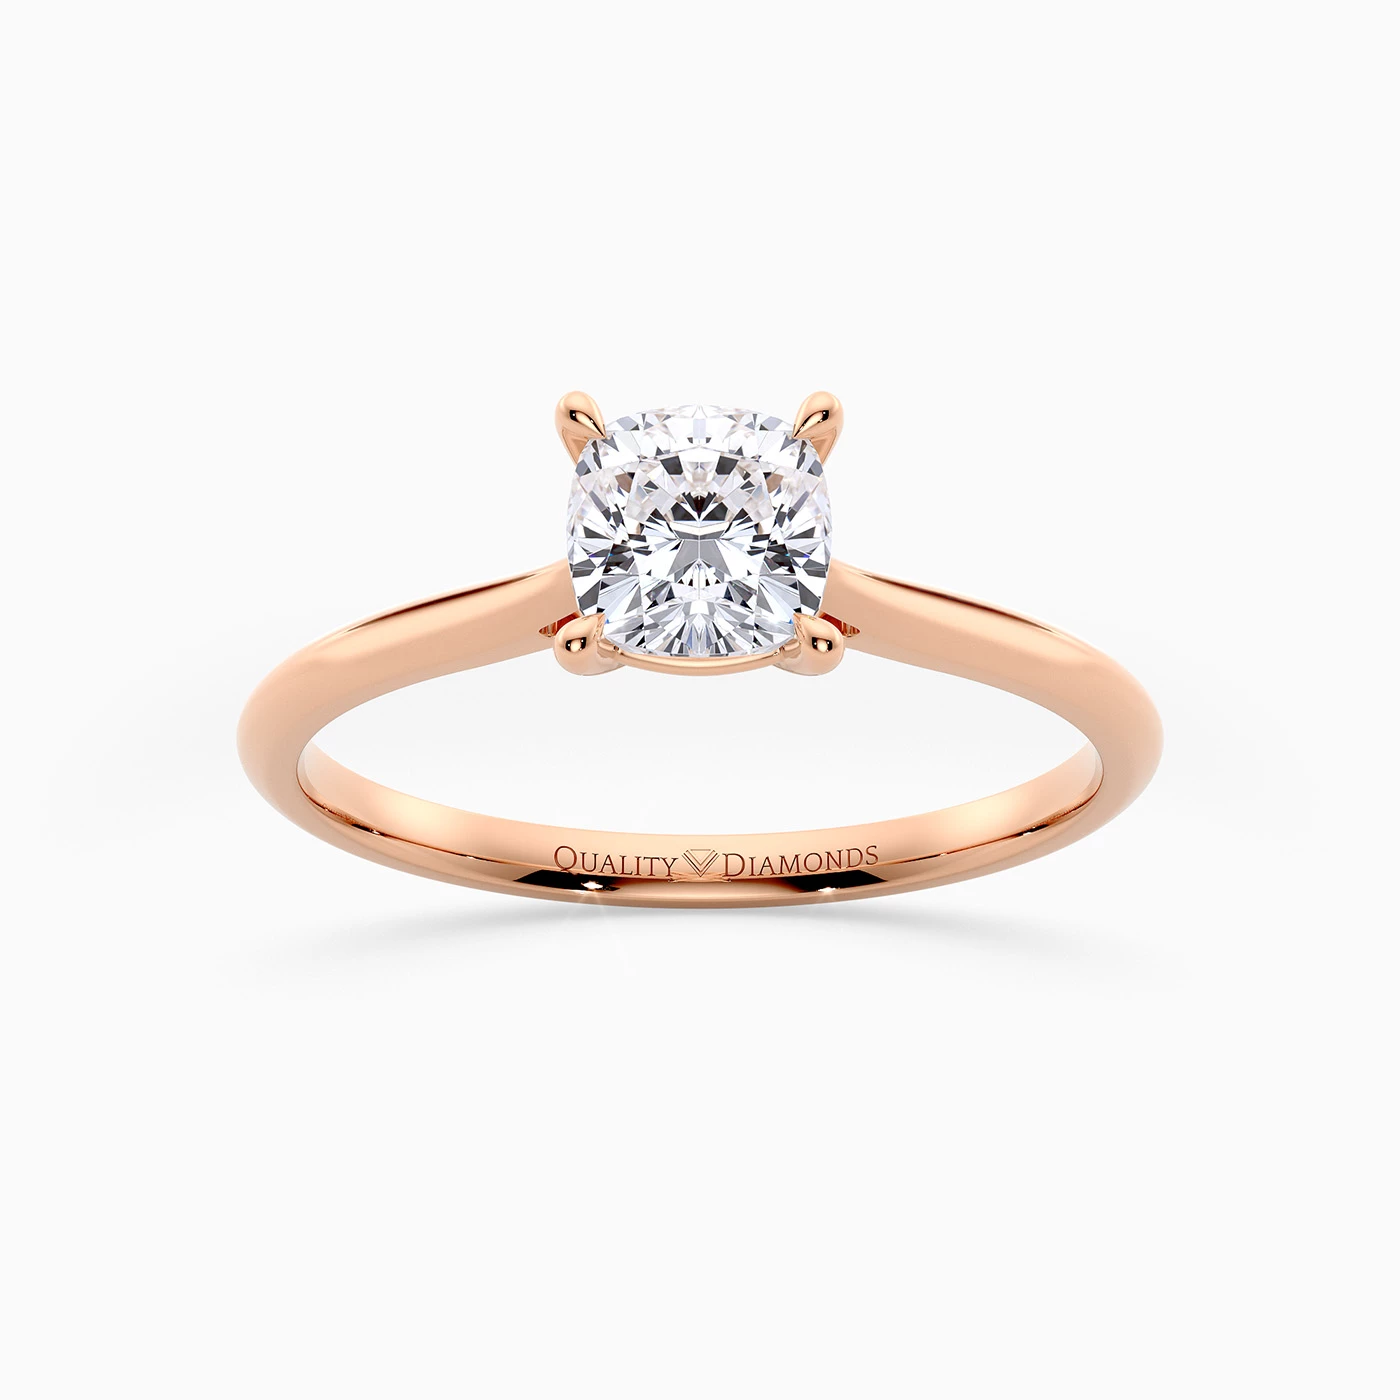 Cushion Carys Diamond Ring in 9K Rose Gold